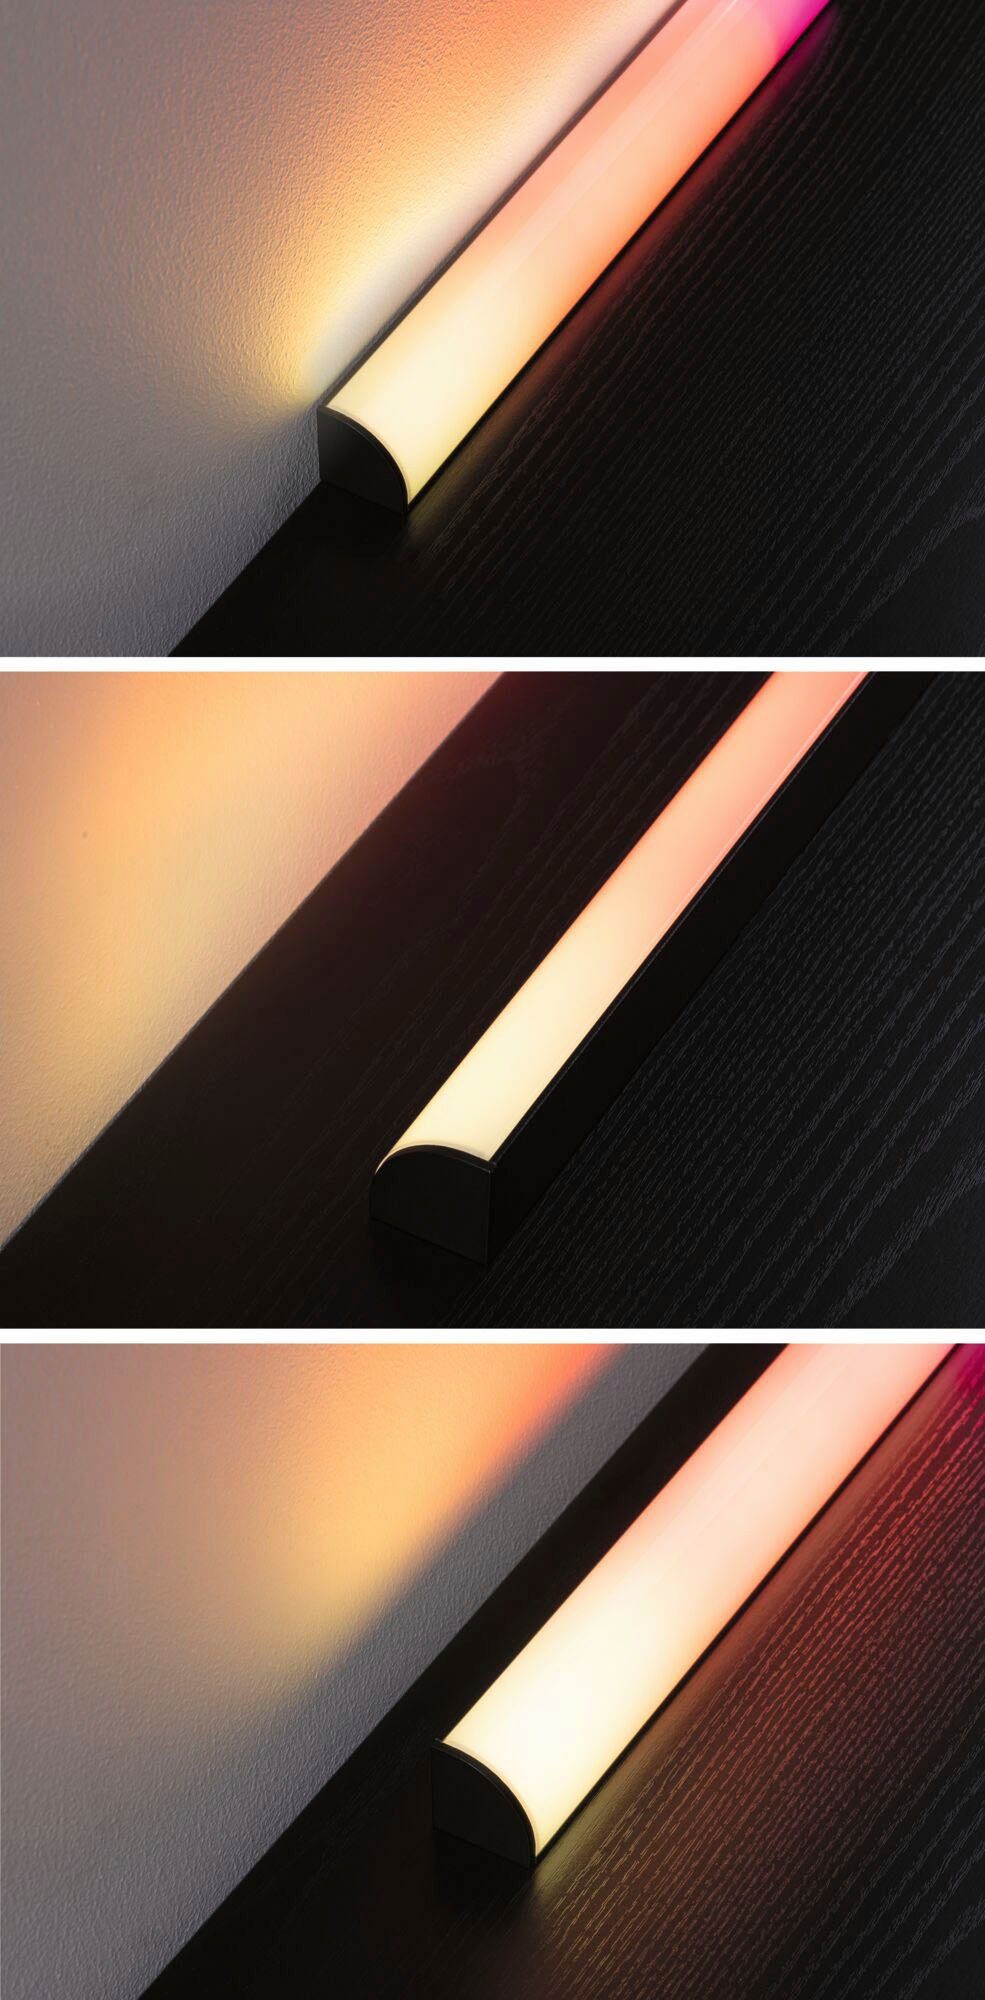 LED-Streifen 30x30mm RGB 2x0,6W Dynamic 2-flammig Lightbar Rainbow Paulmann 2x24lm, EntertainLED